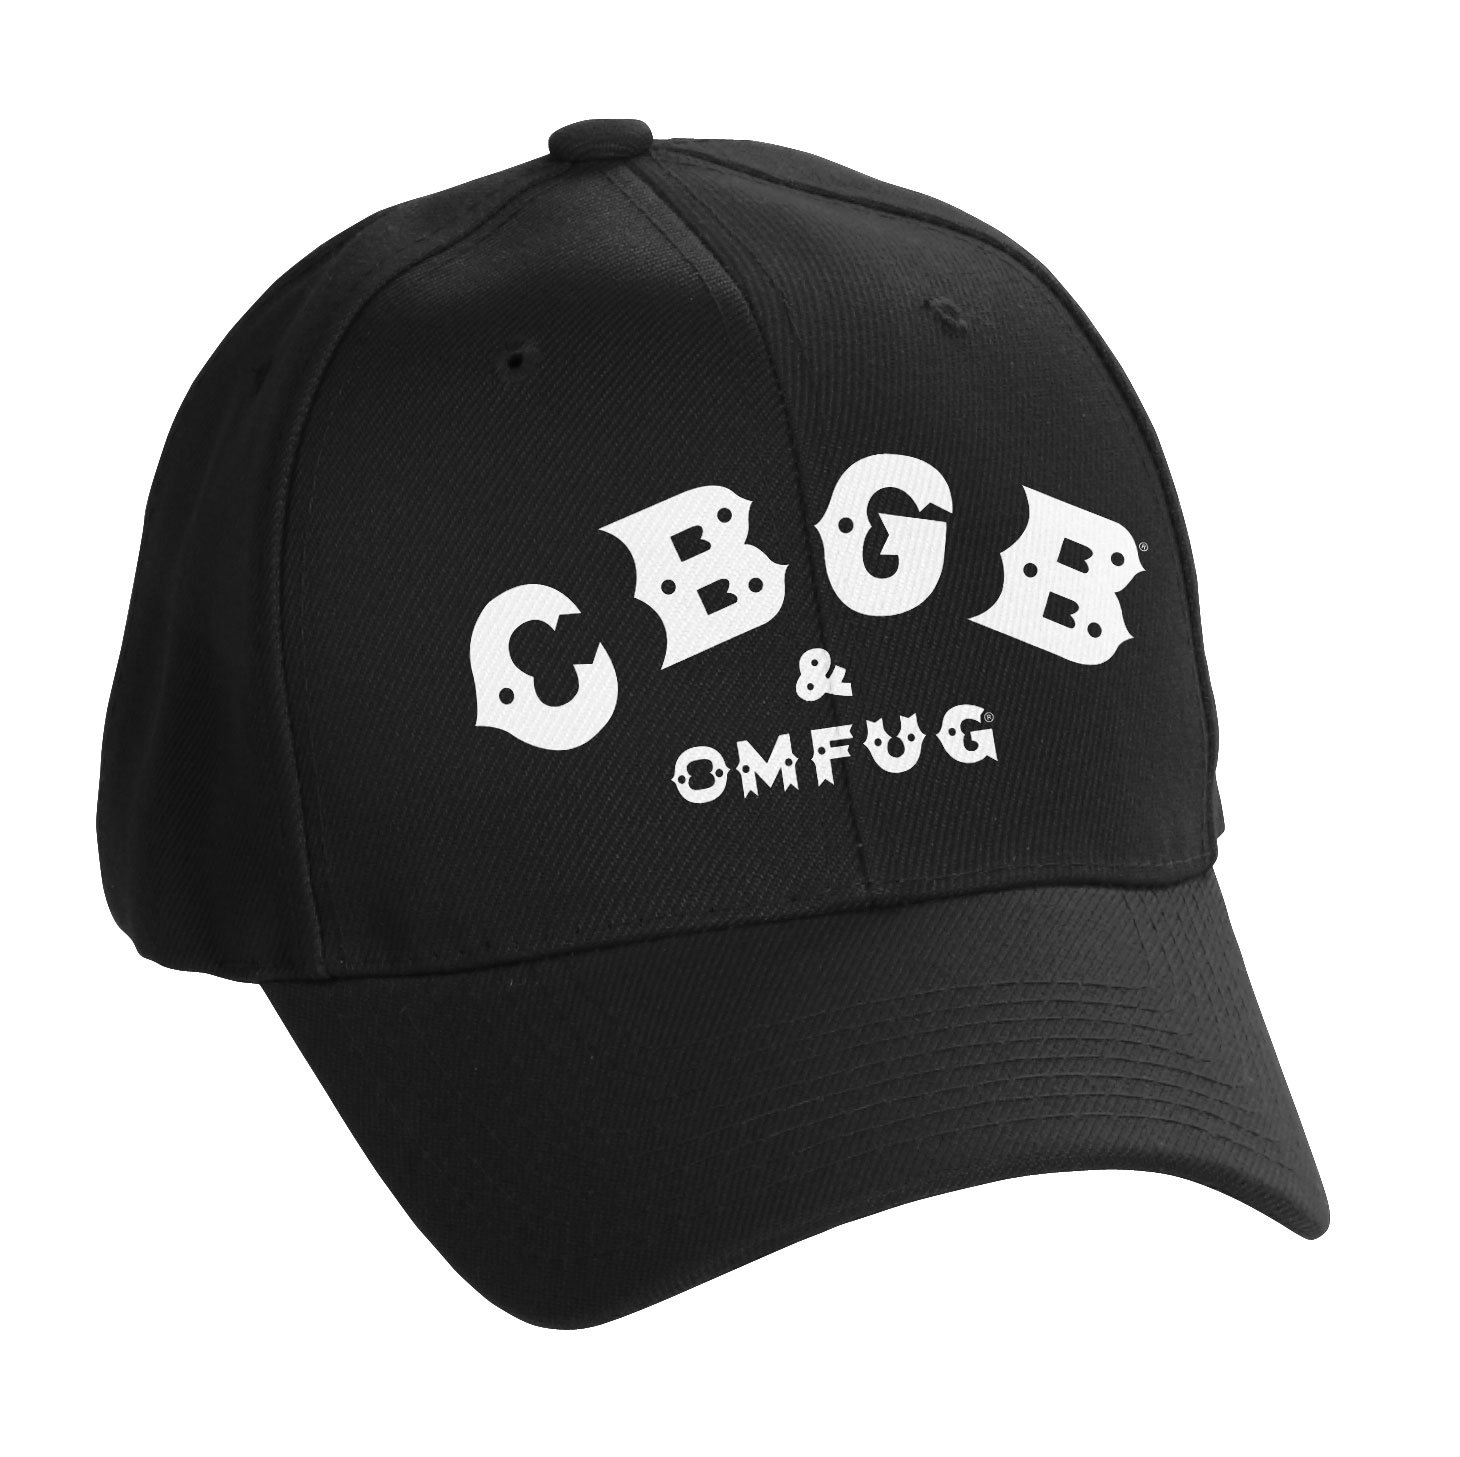 Officially Licensed Merchandise CBGB & OMFUG Messenger Bag